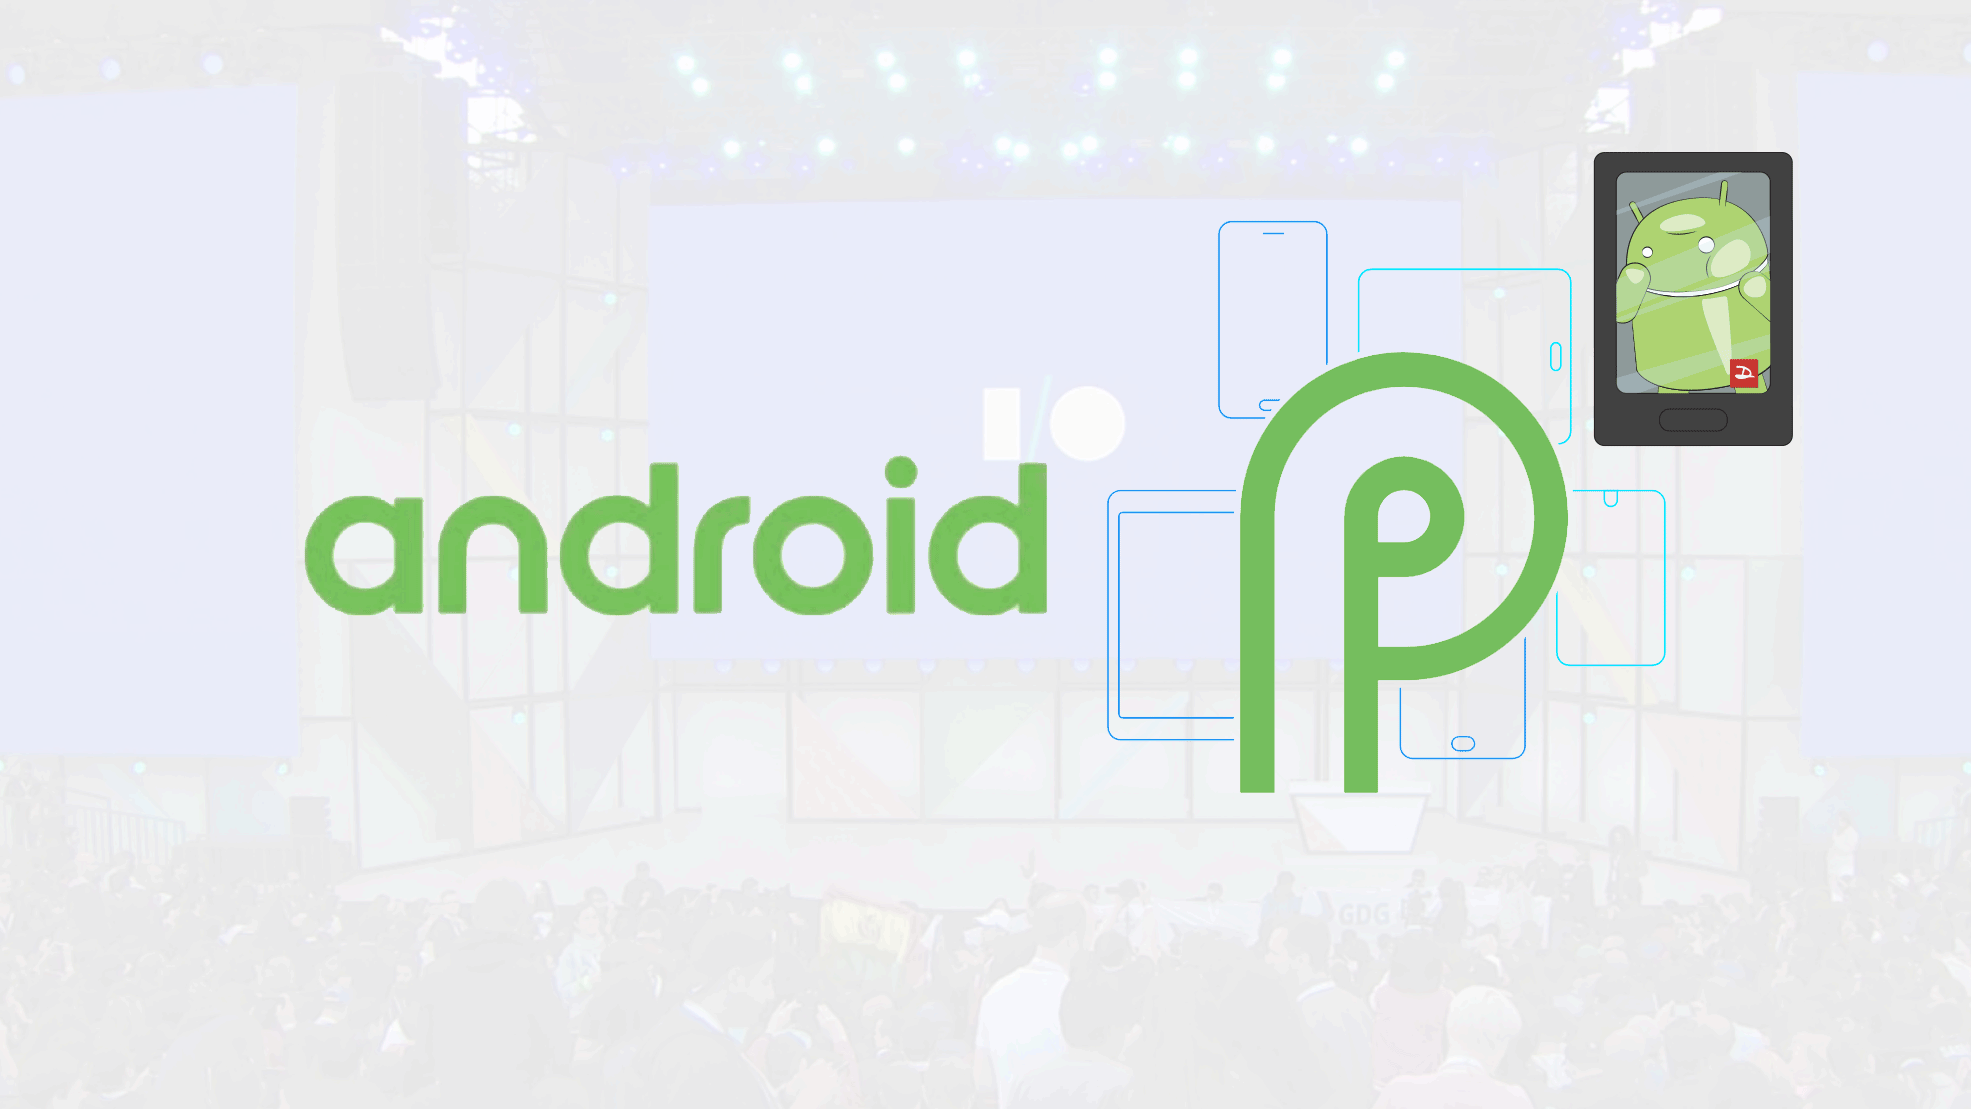 Google เปิดตัว Android P ระบบปฏิบัติการเวอร์ชั่นใหม่ที่ฉลาดขึ้น ใช้งานง่ายกว่าเดิม พร้อมฟีเจอร์ใหม่ๆ เพียบ